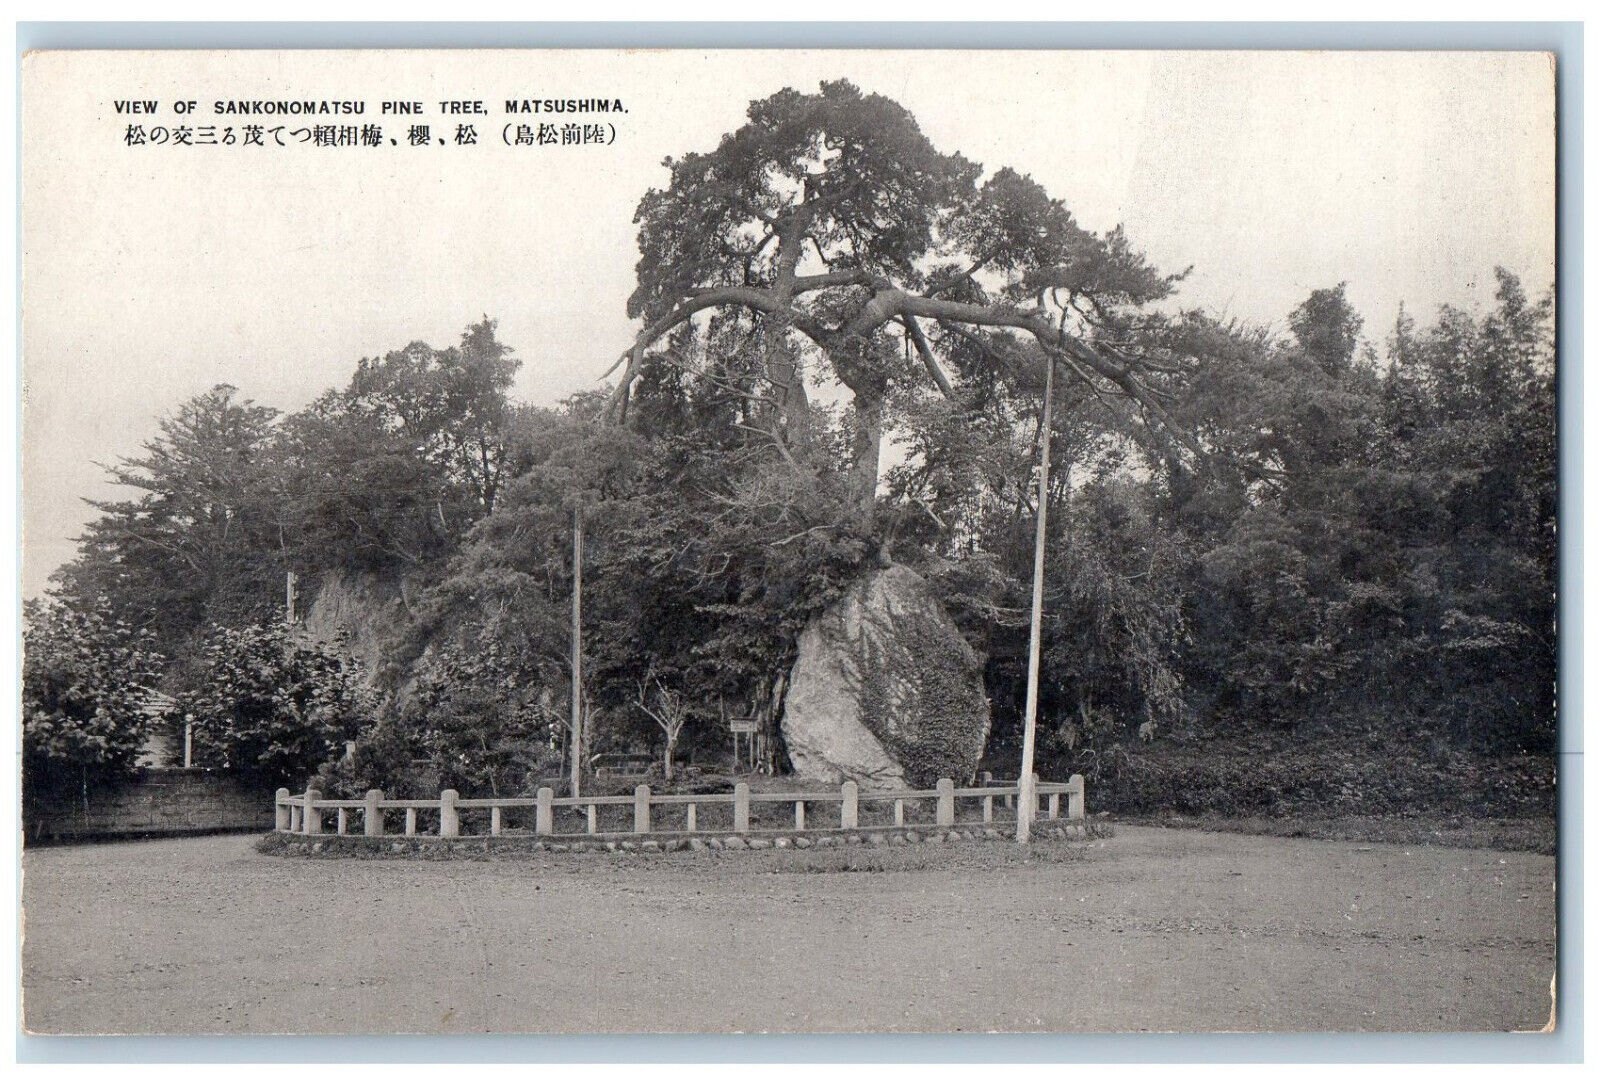 Matsushima Japan Postcard View of Sankonomatsu Pine Tree c1910 Antique